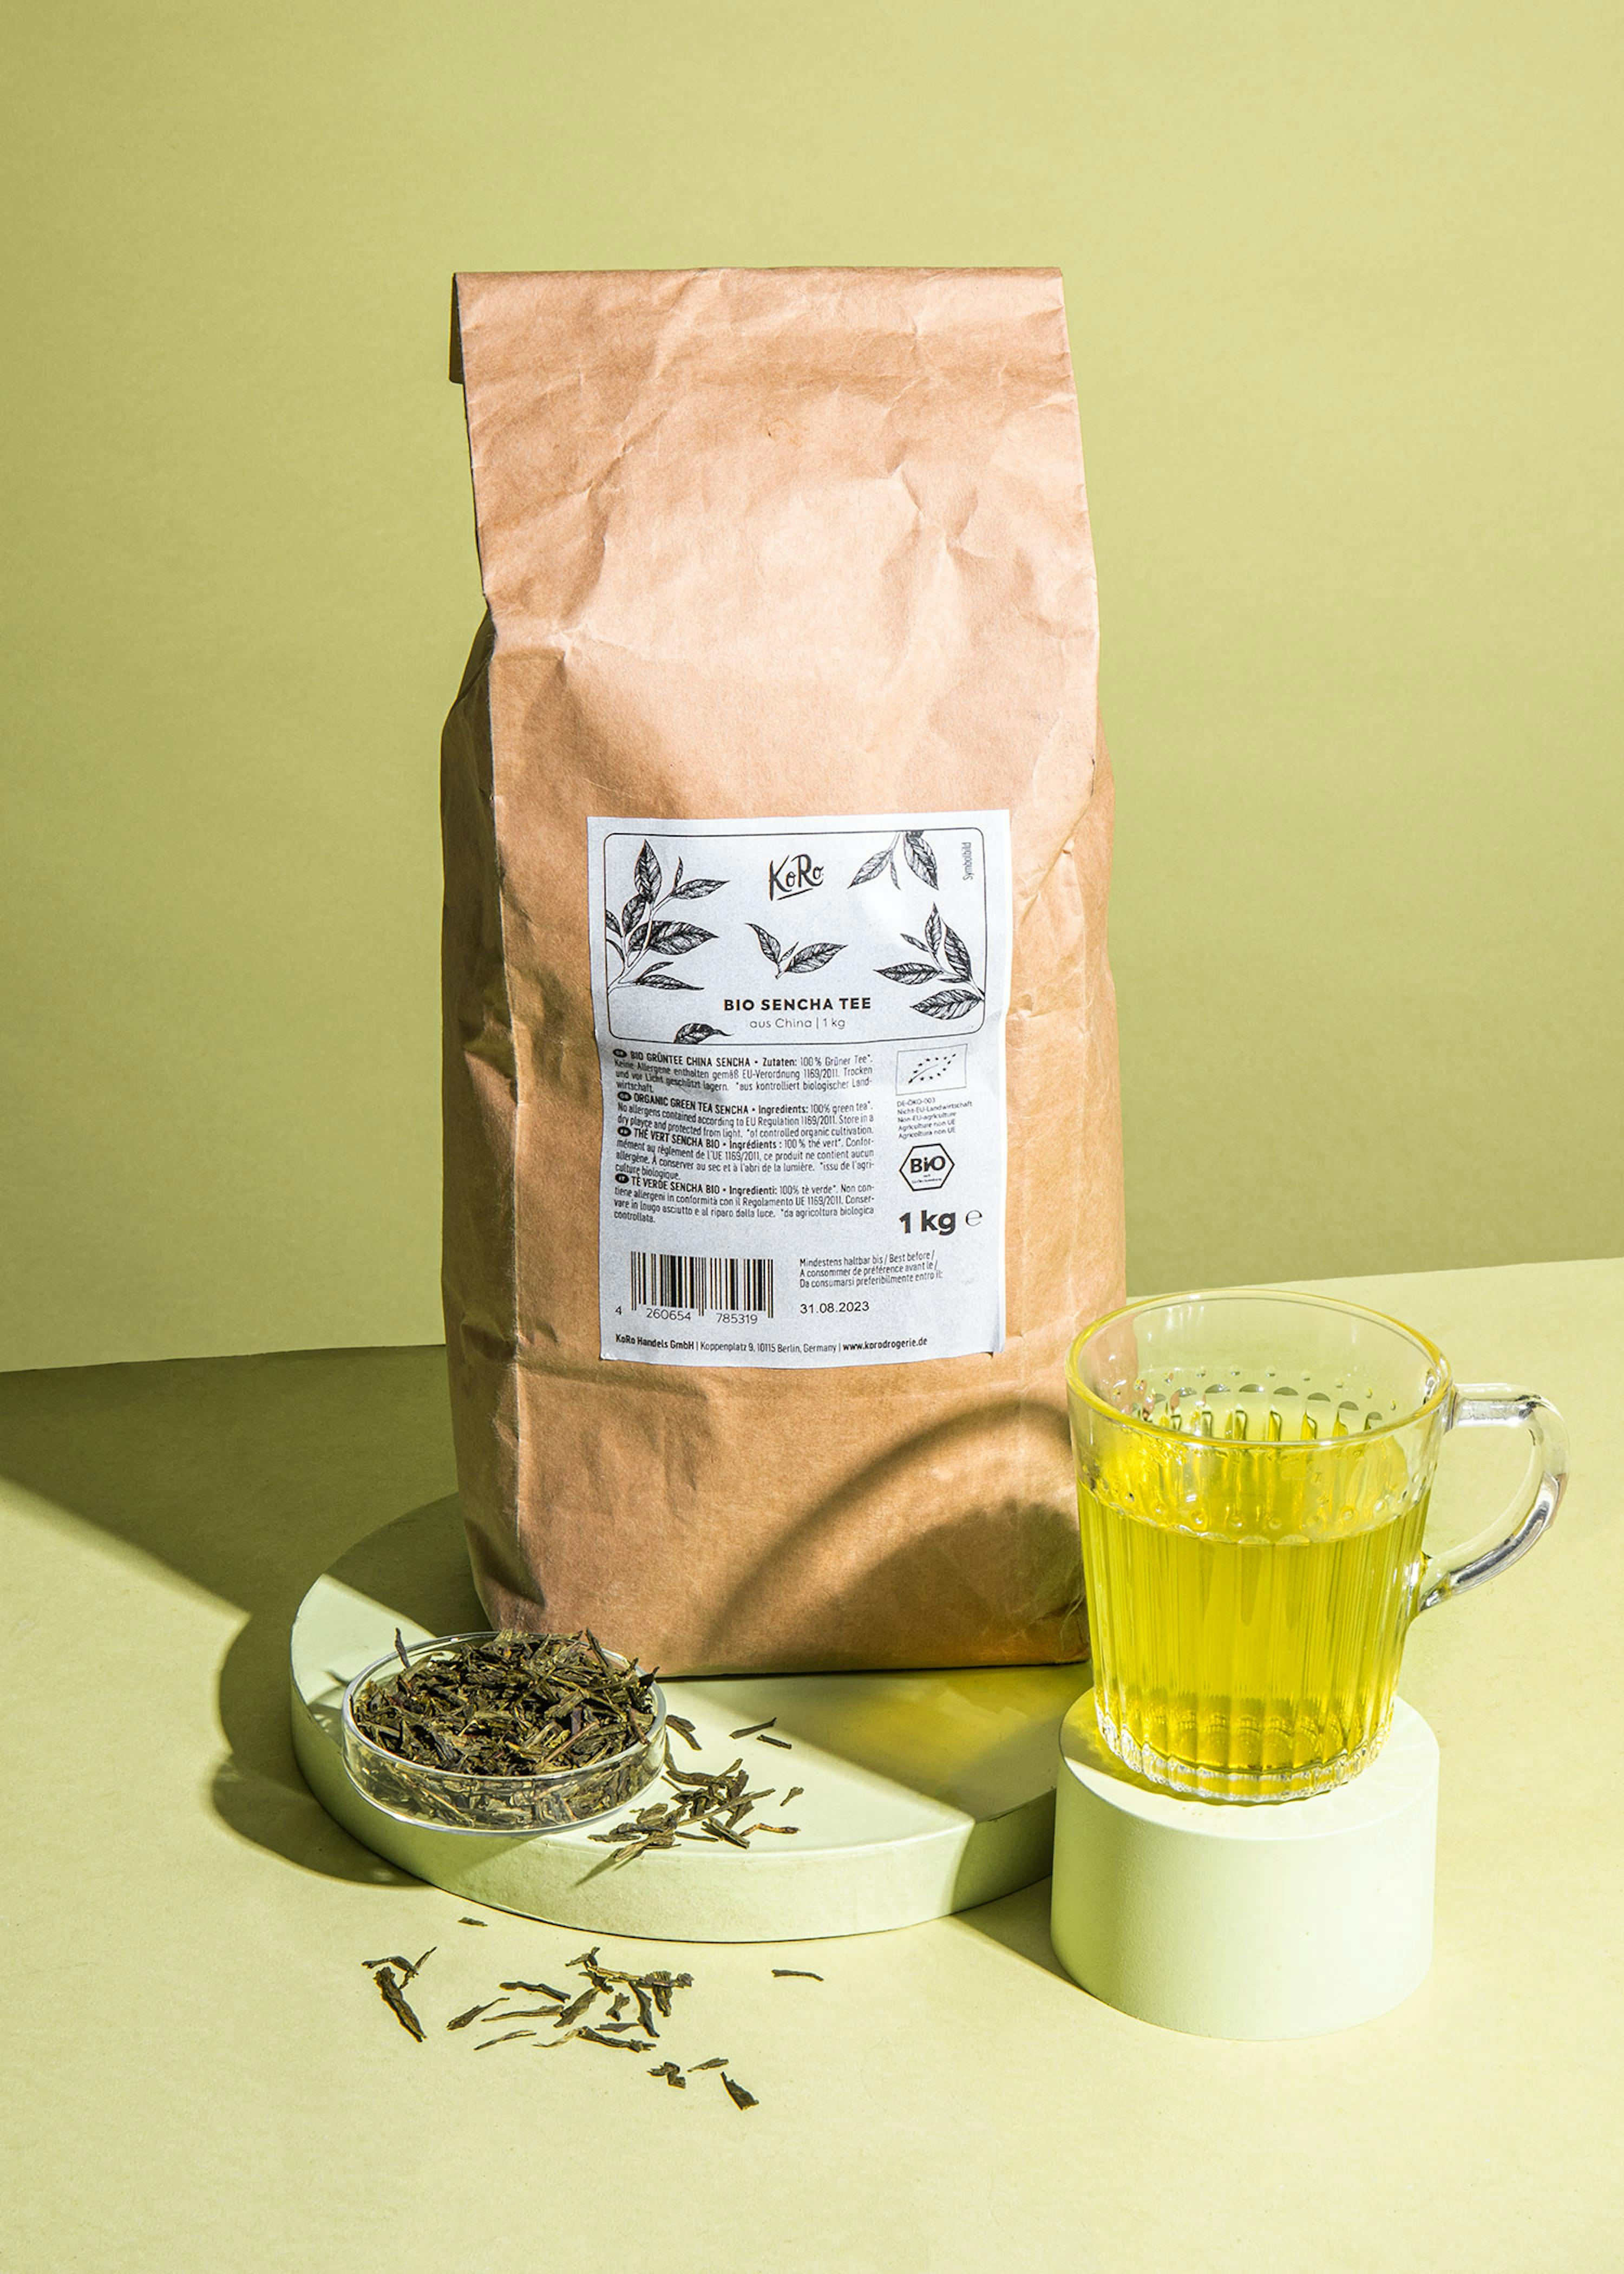 Achetez du thé vert Sencha bio